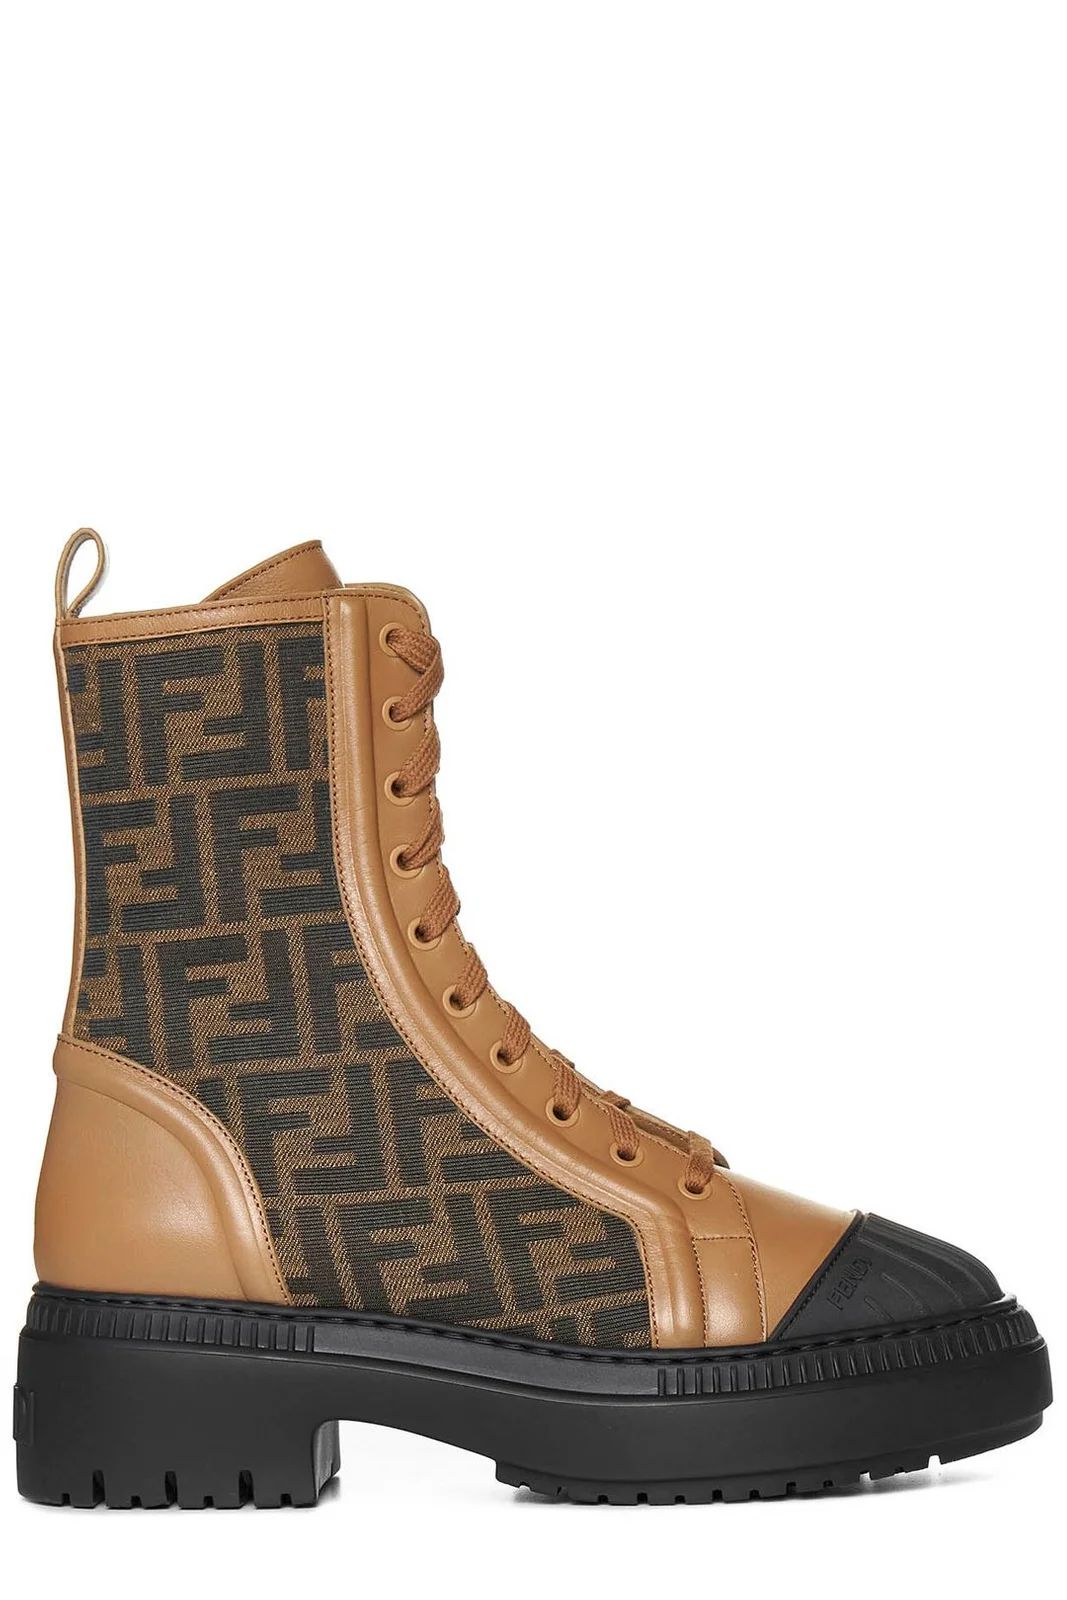 Fendi Domino Lace-Up Combat Boots | Cettire Global